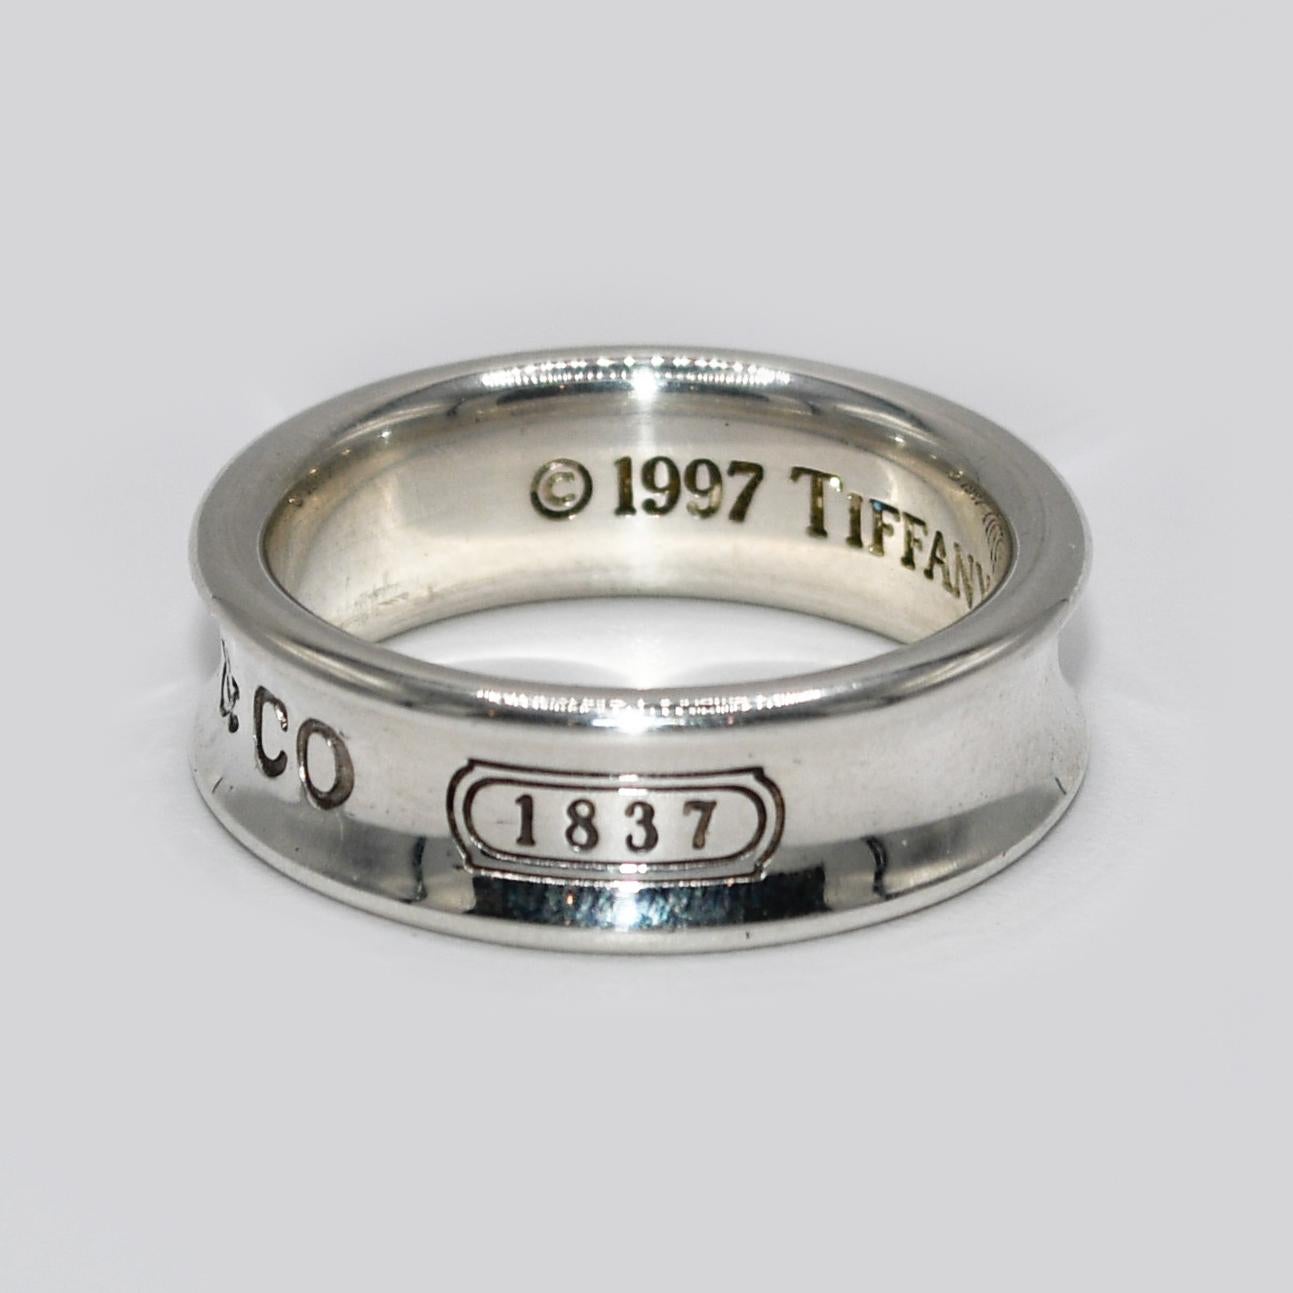 1997 tiffany & co. 925 ring price